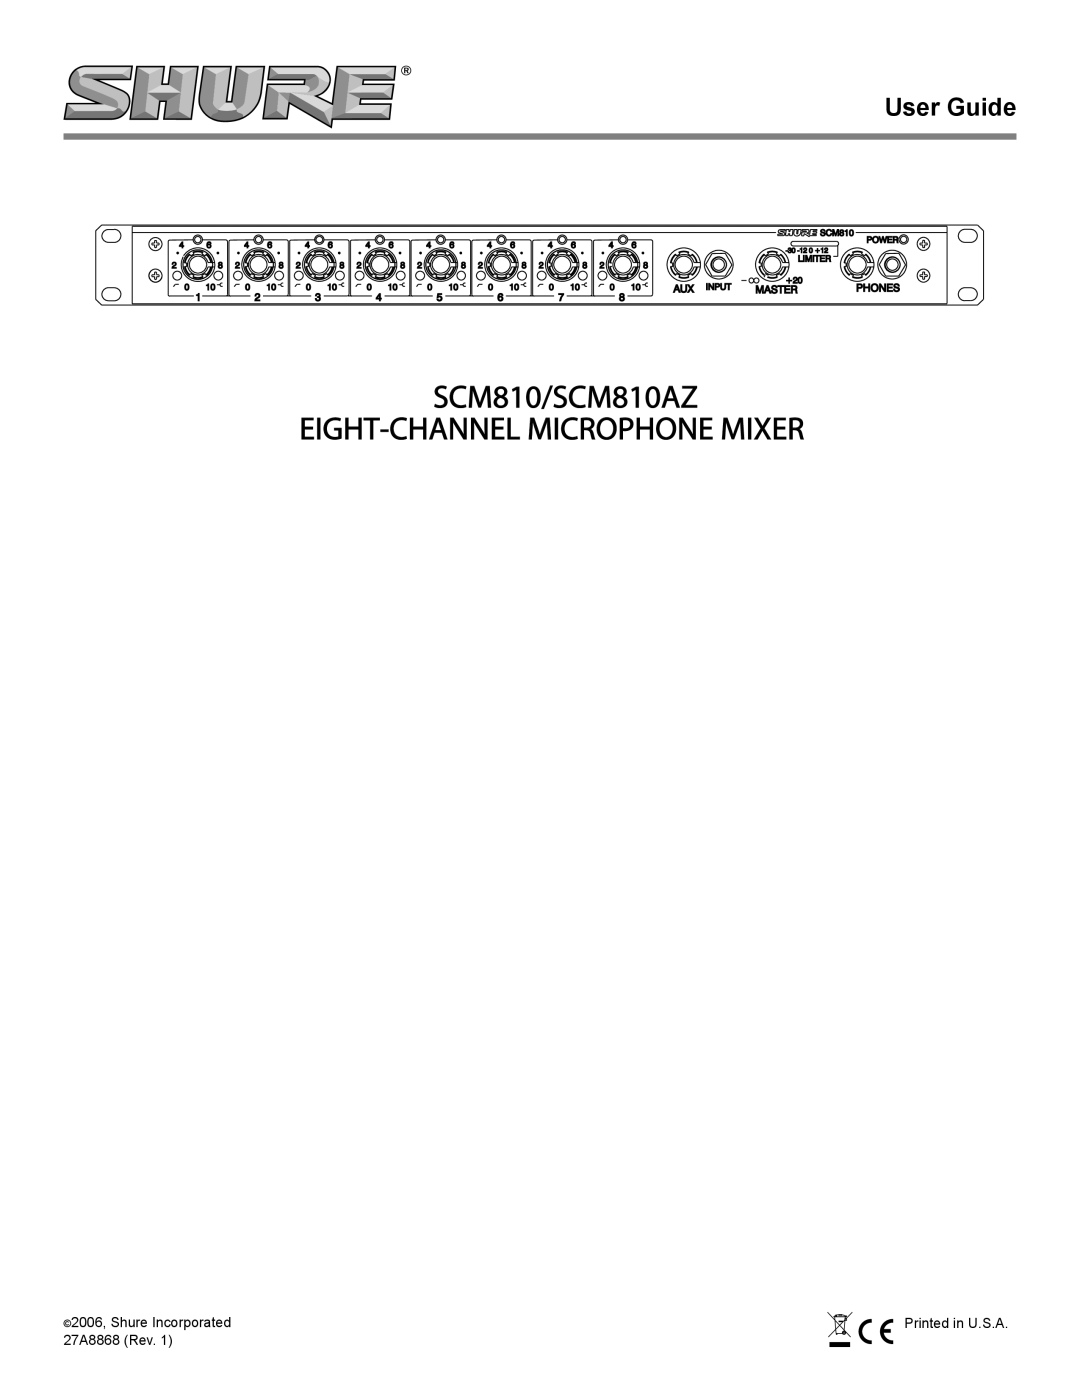 Shure manual SCM810/SCM810AZ EIGHT-CHANNEL MICROPHONE MIXER, User Guide 